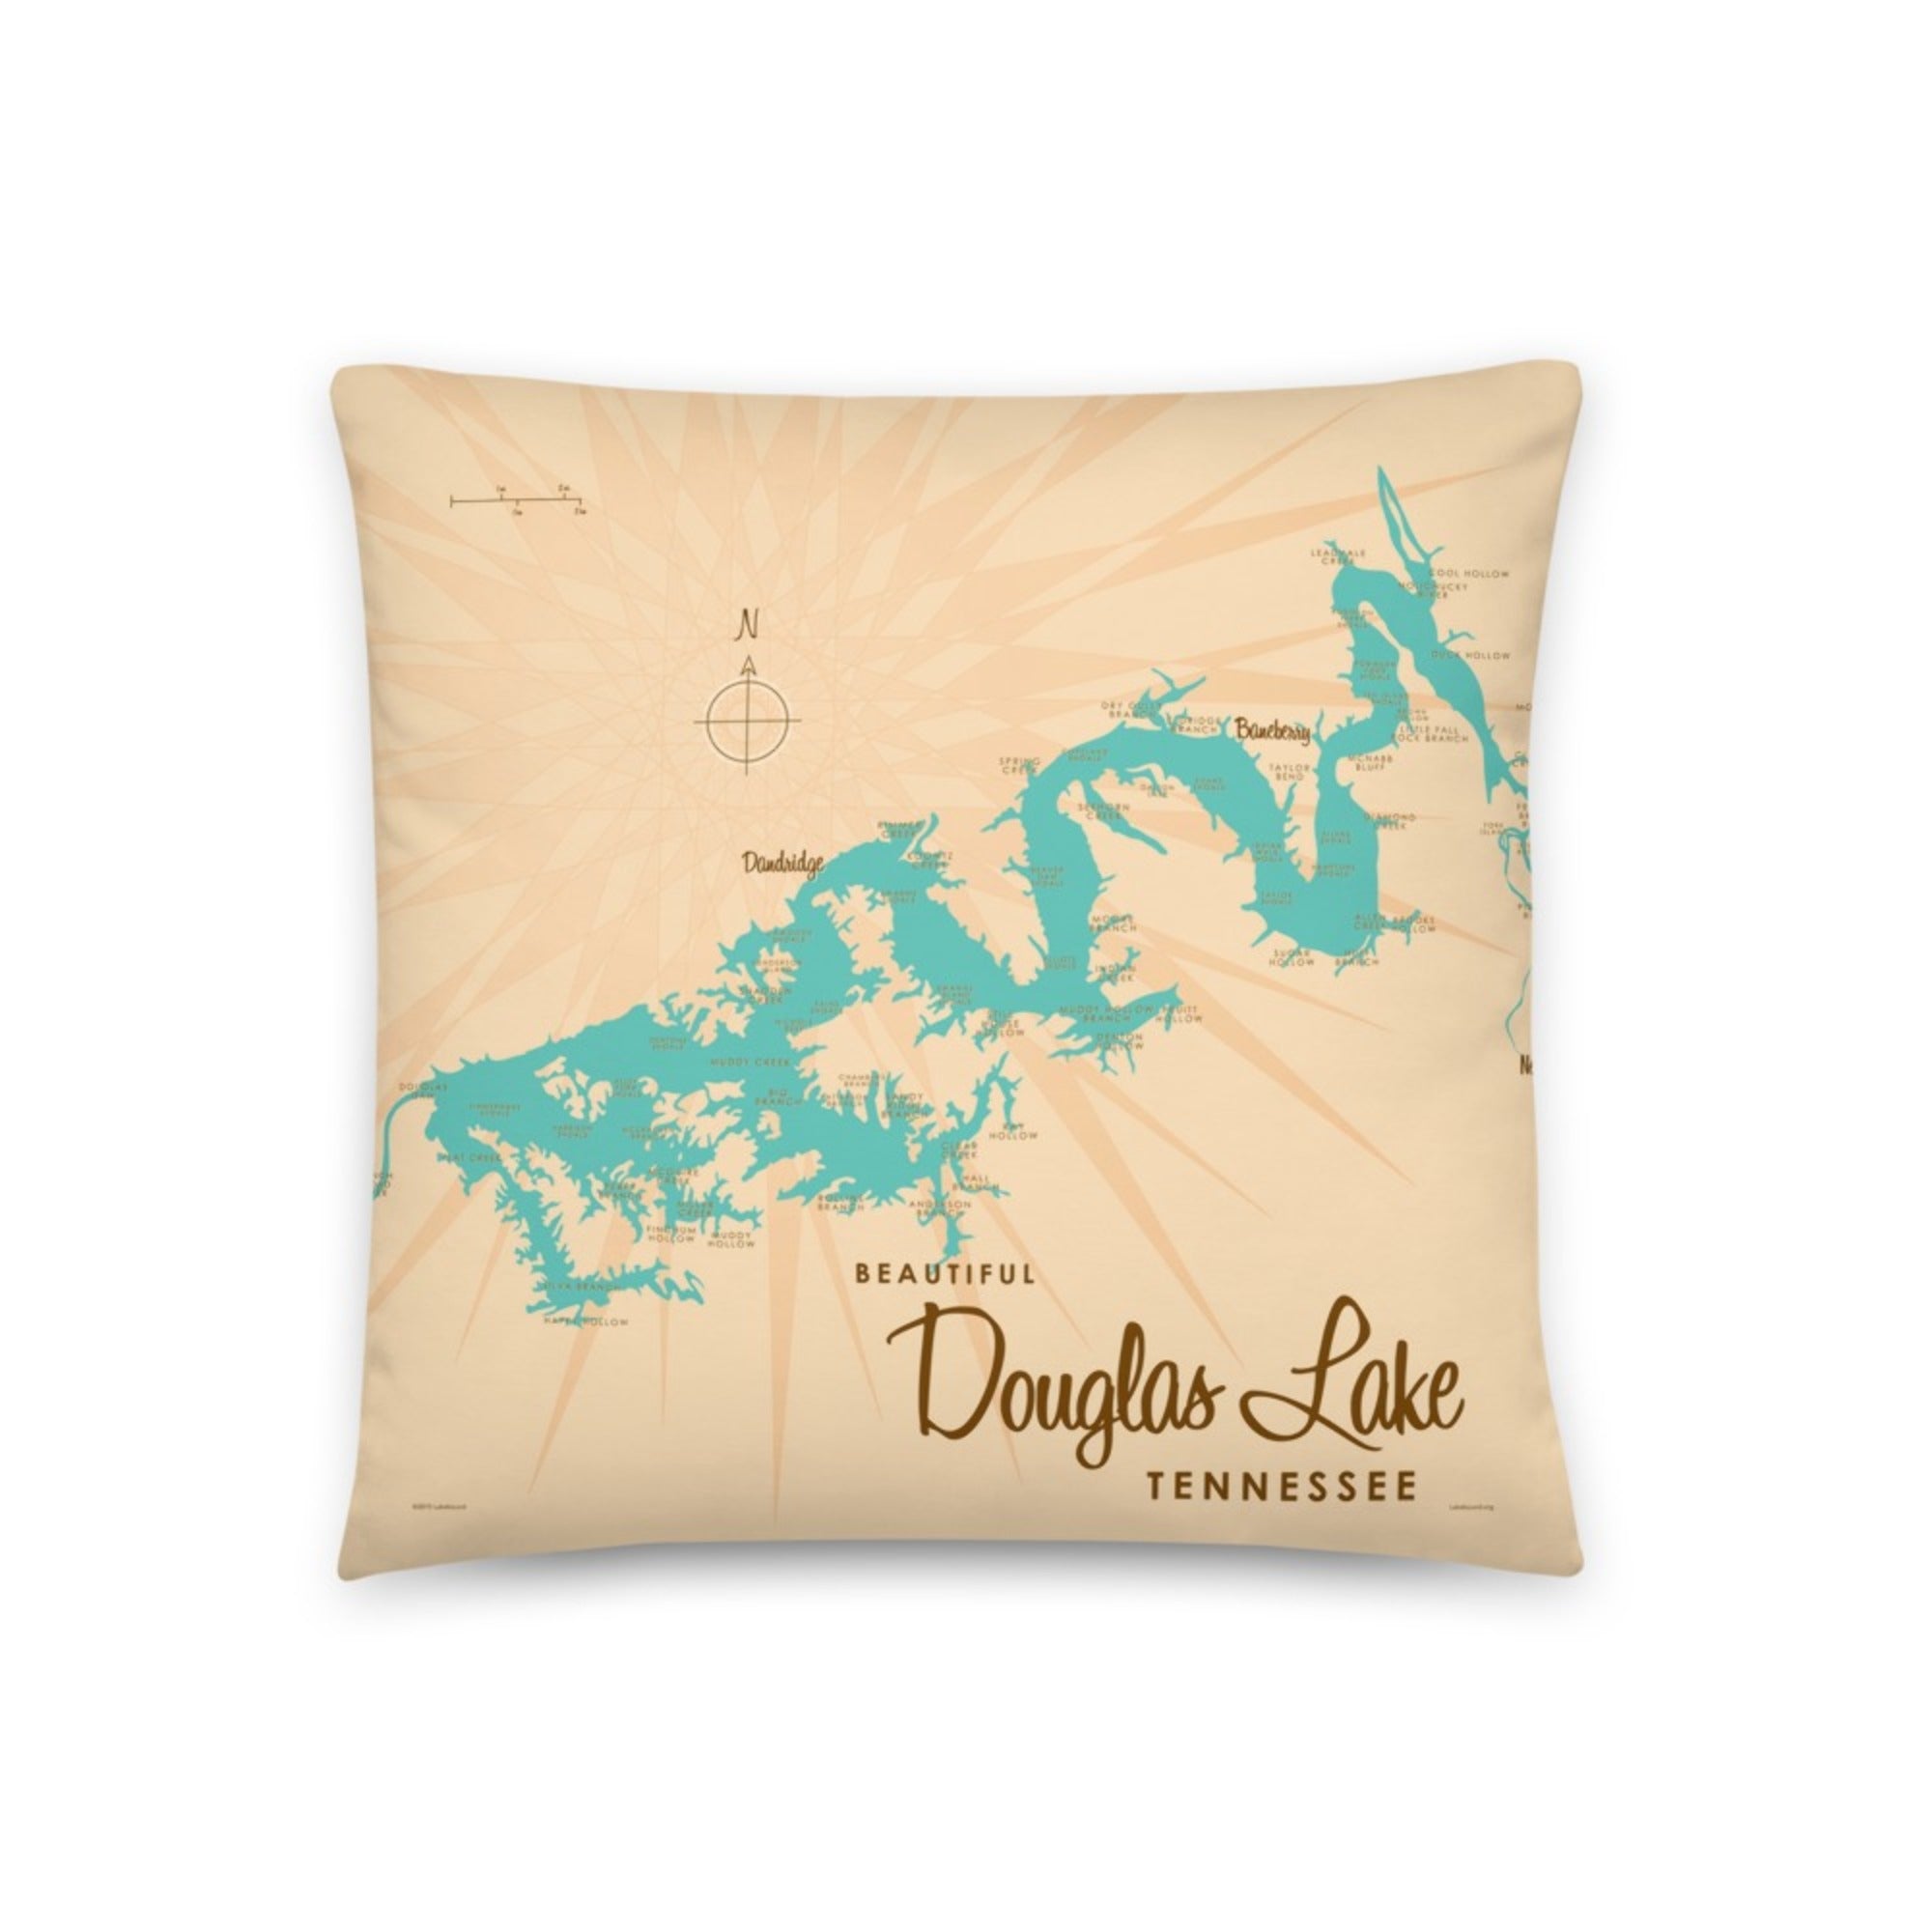 Douglas Lake Tennessee Pillow